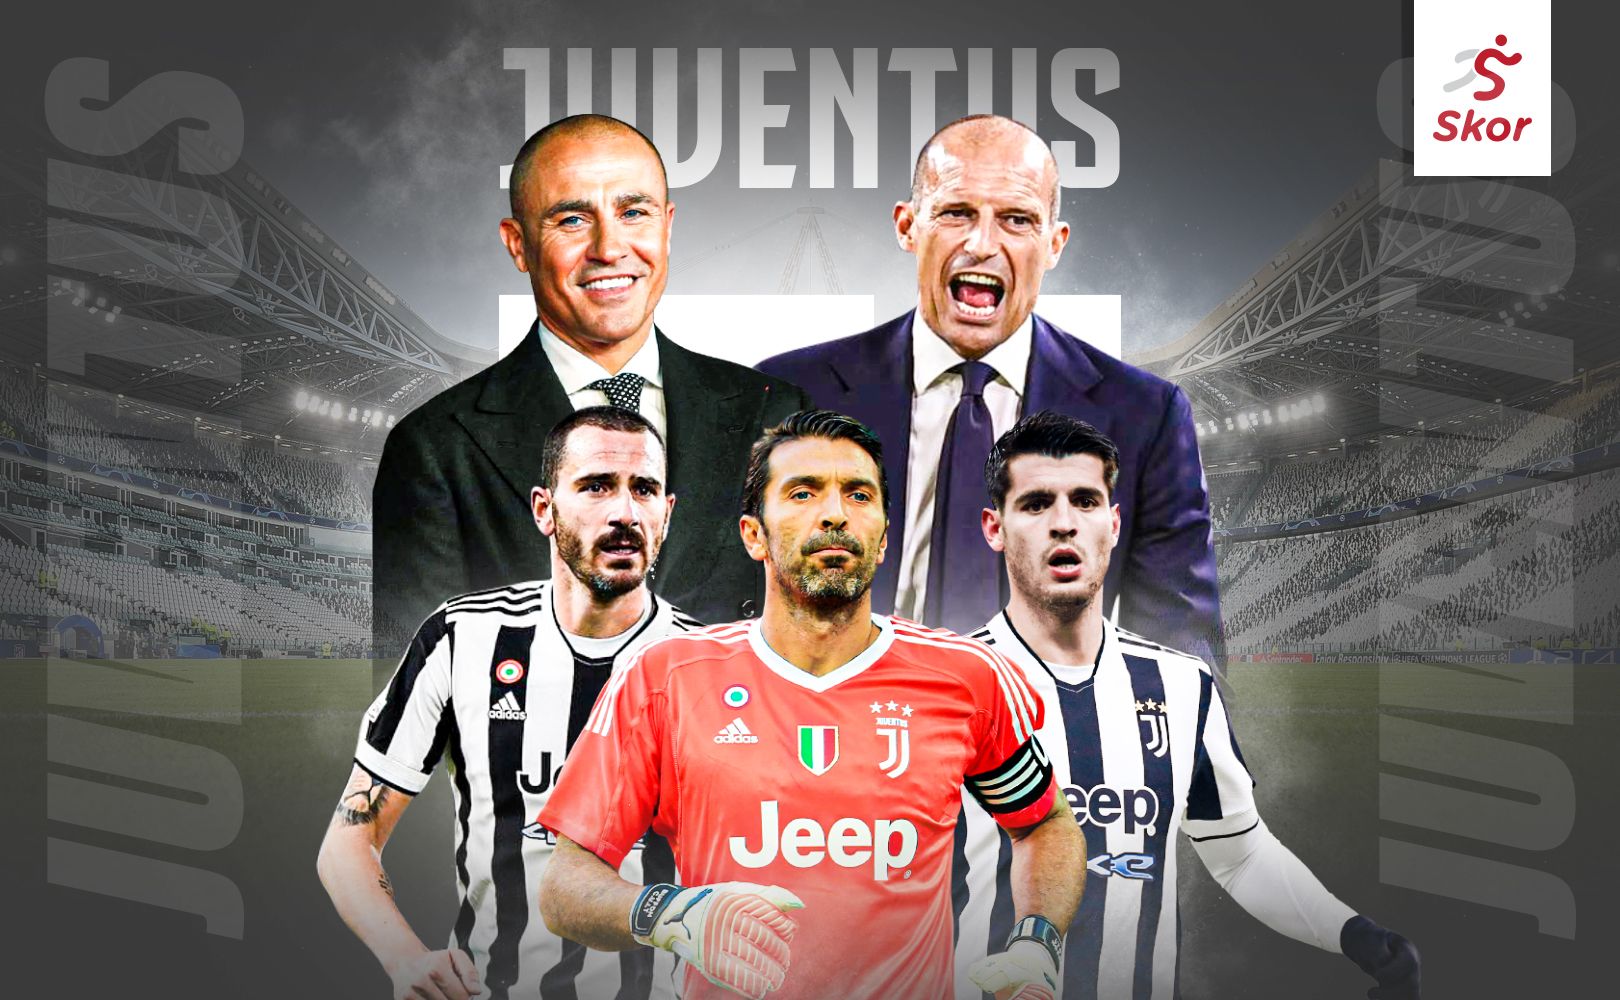 Mereka yang kembali ke Juventus (arah jarum jam): Fabio Cannavaro, Massimiliano Allegri, Alvaro Morata, Gianluigi Buffon, Leonardo Bonucci.